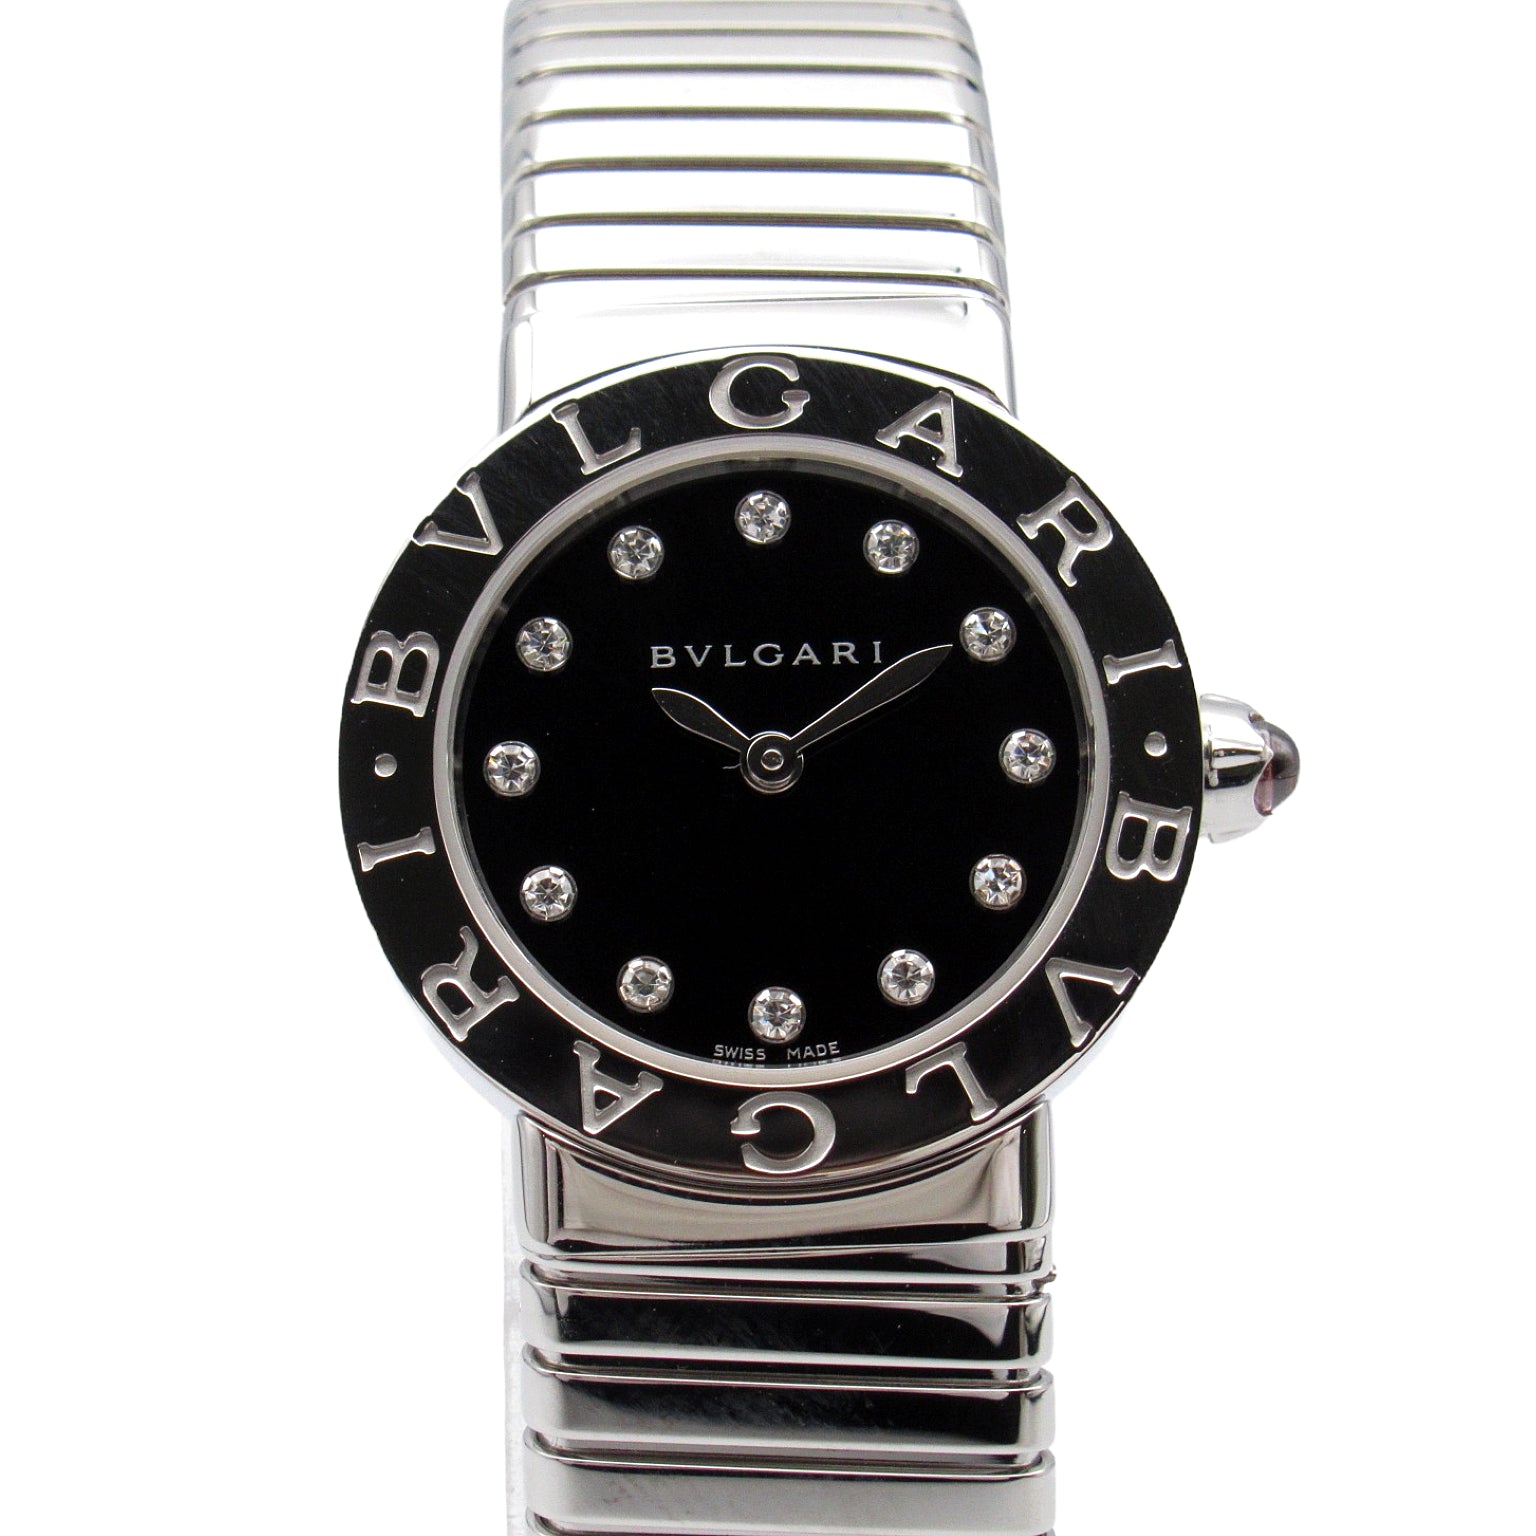 Bulgari BVLGARI n Tubegas 12P Diamond  Watch Stainless Steel  Black BBL26 2TS